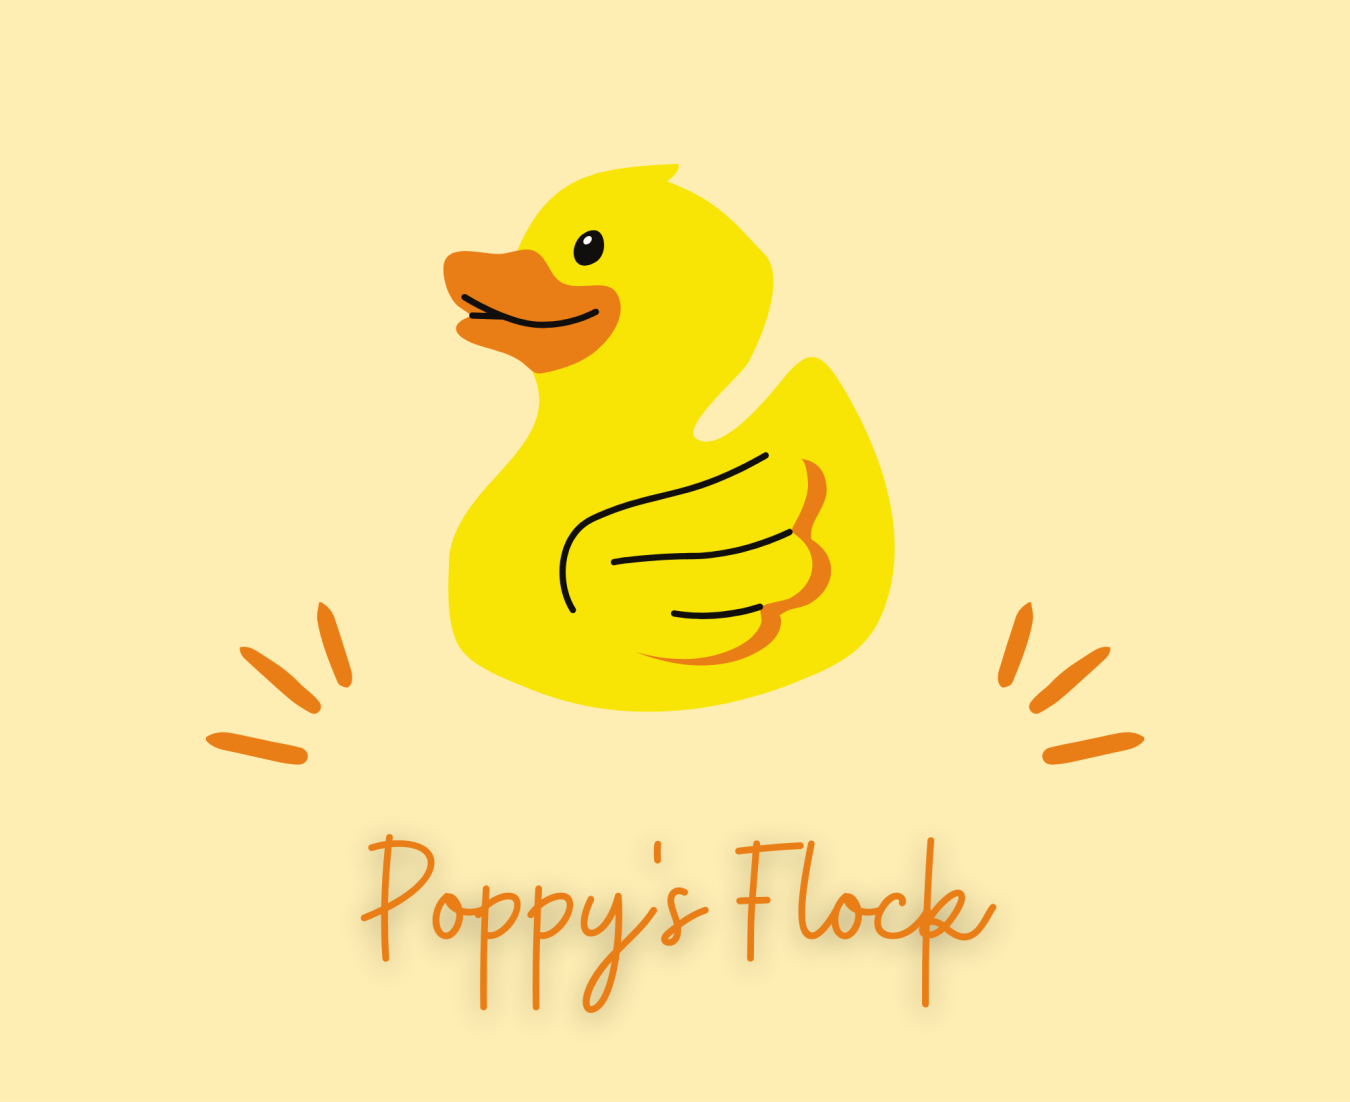 Poppy's Flock